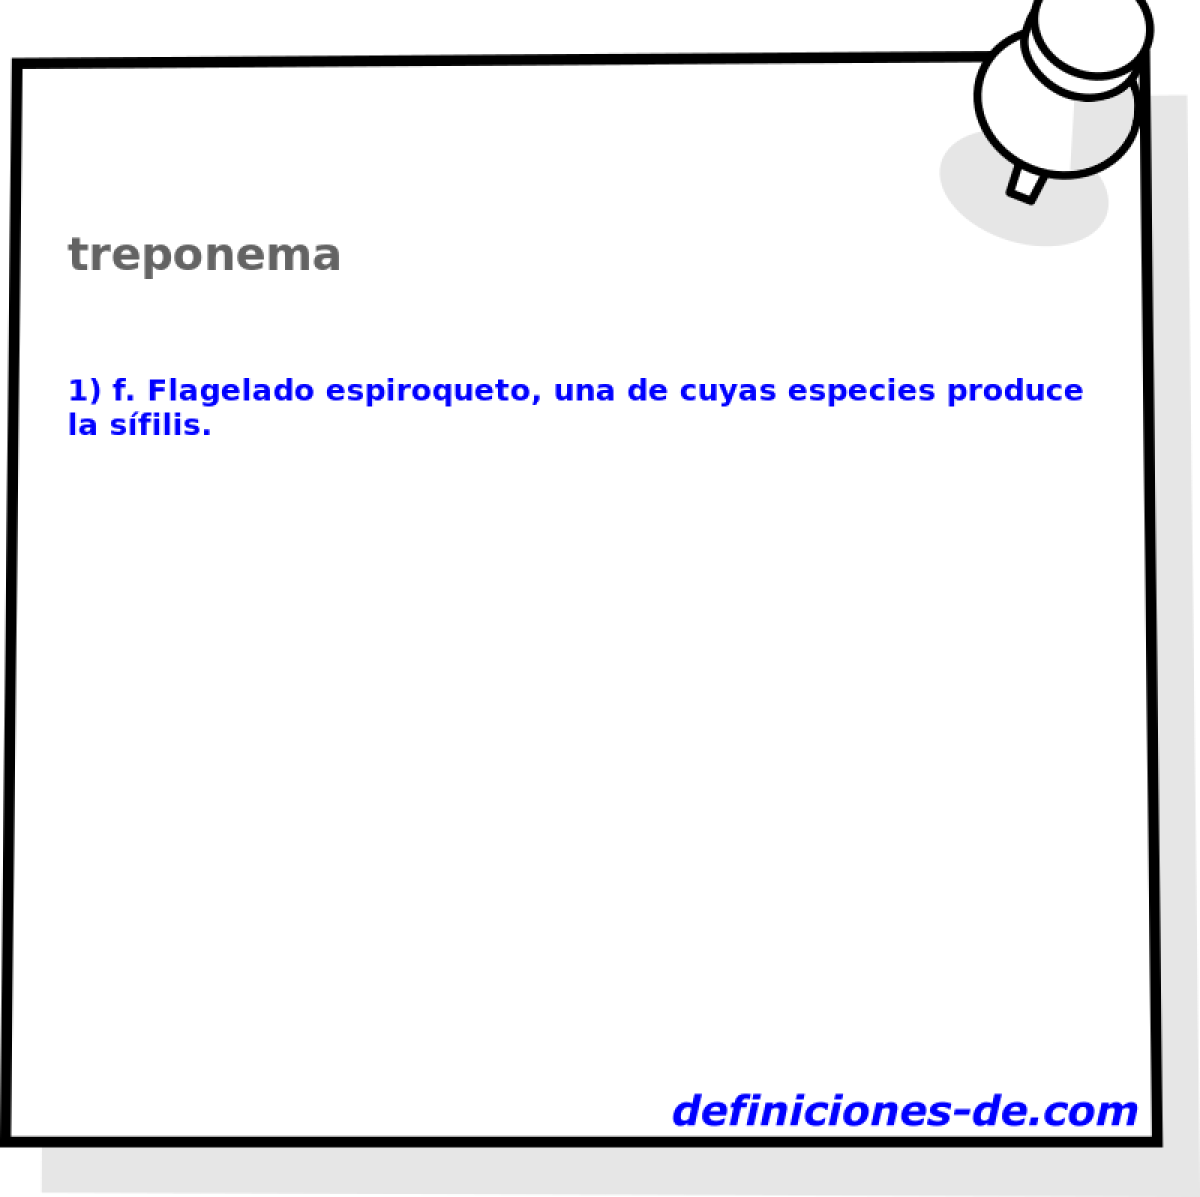 treponema 